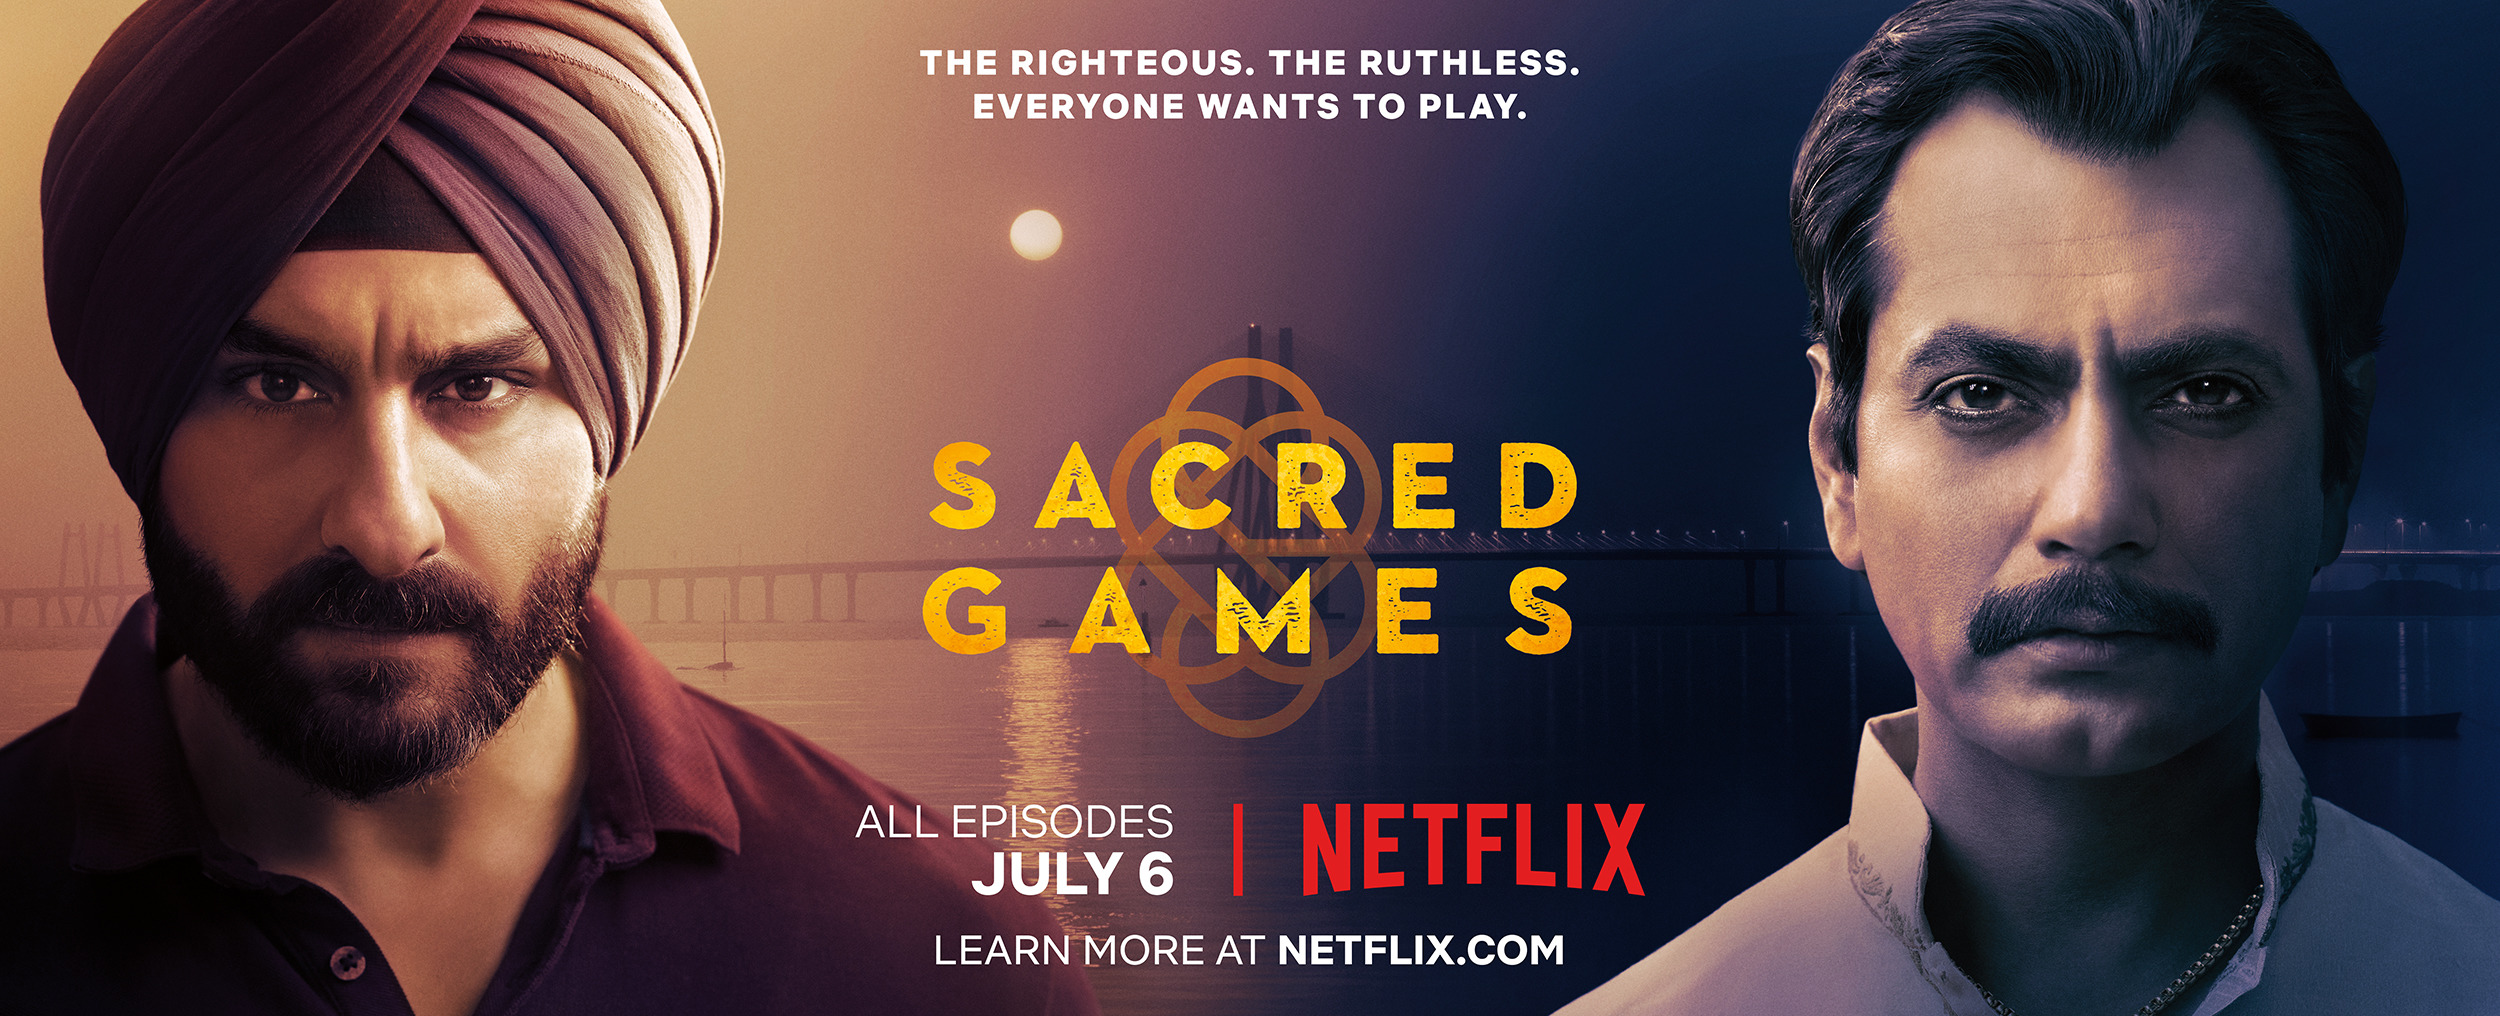 Mega Sized TV Poster Image for Sacred Games (#8 of 20)